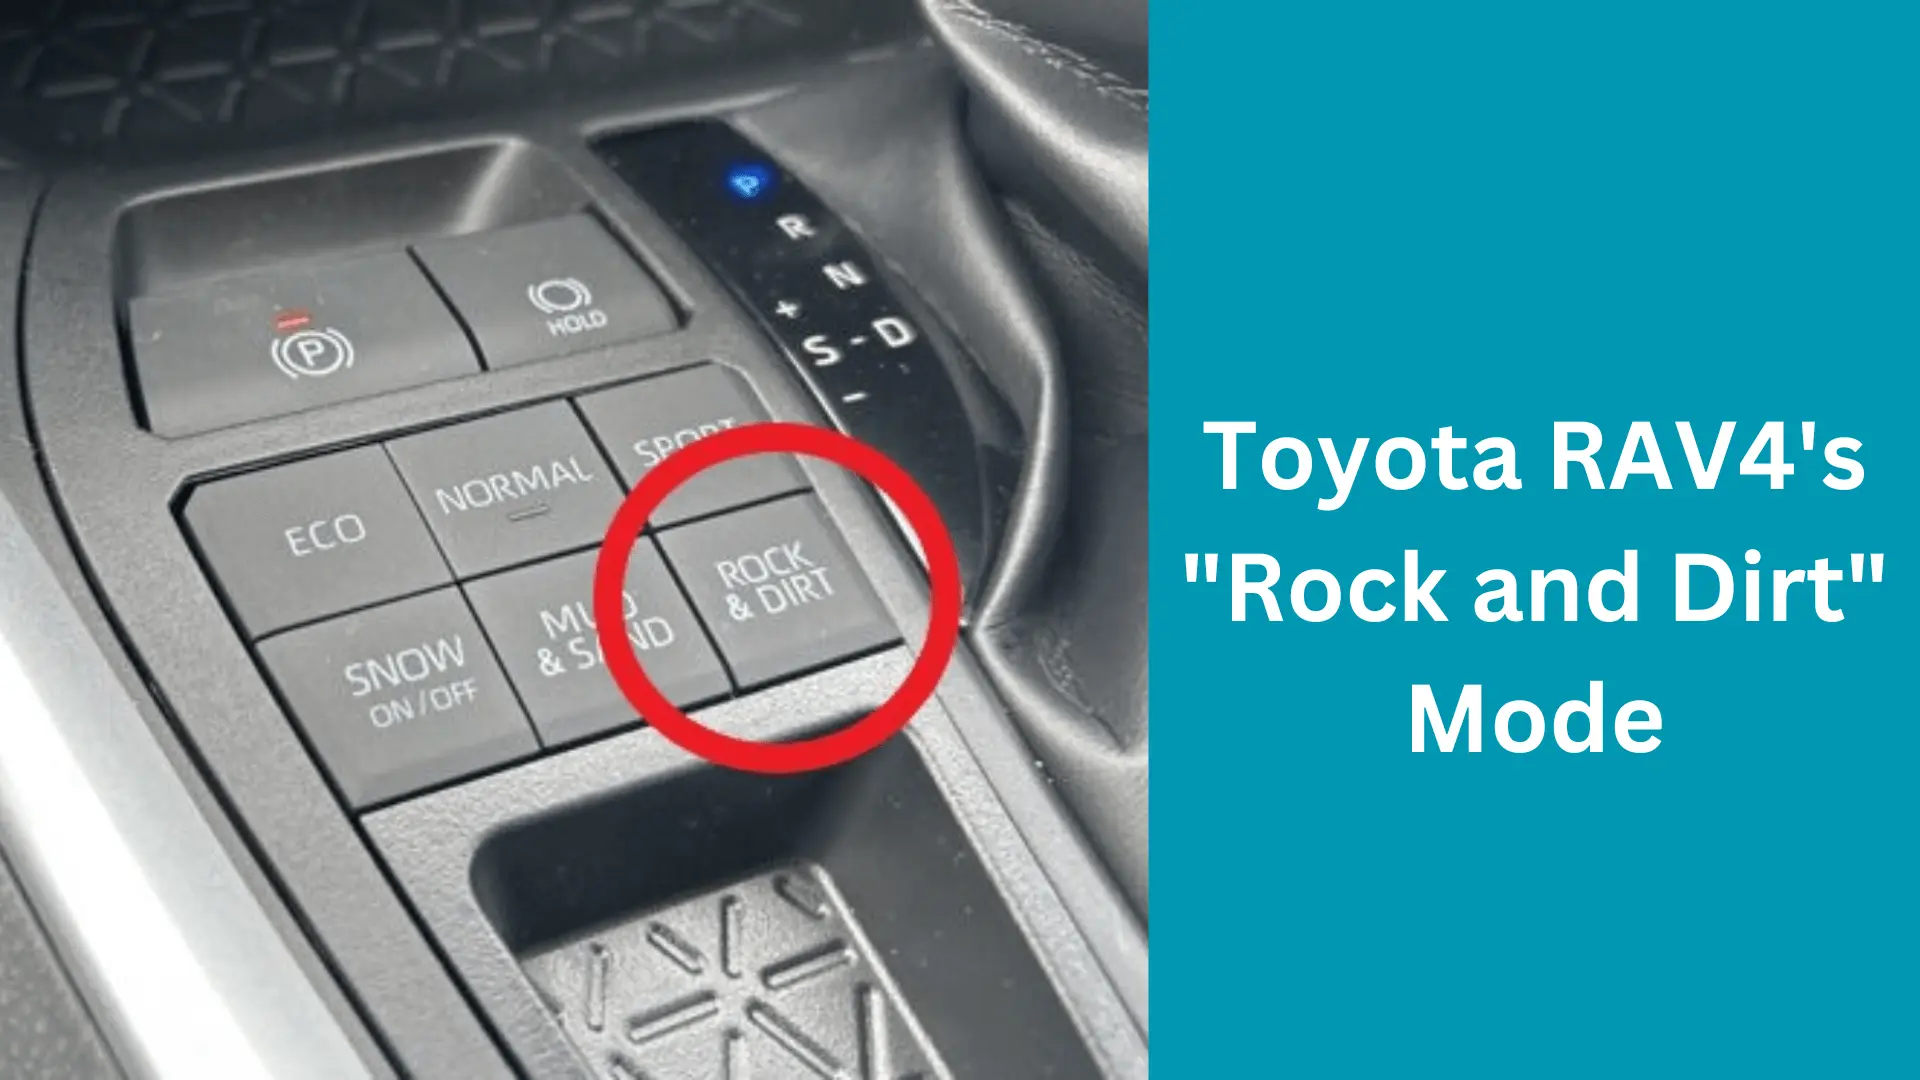 Toyota rav4 Rock and Dirt Mode